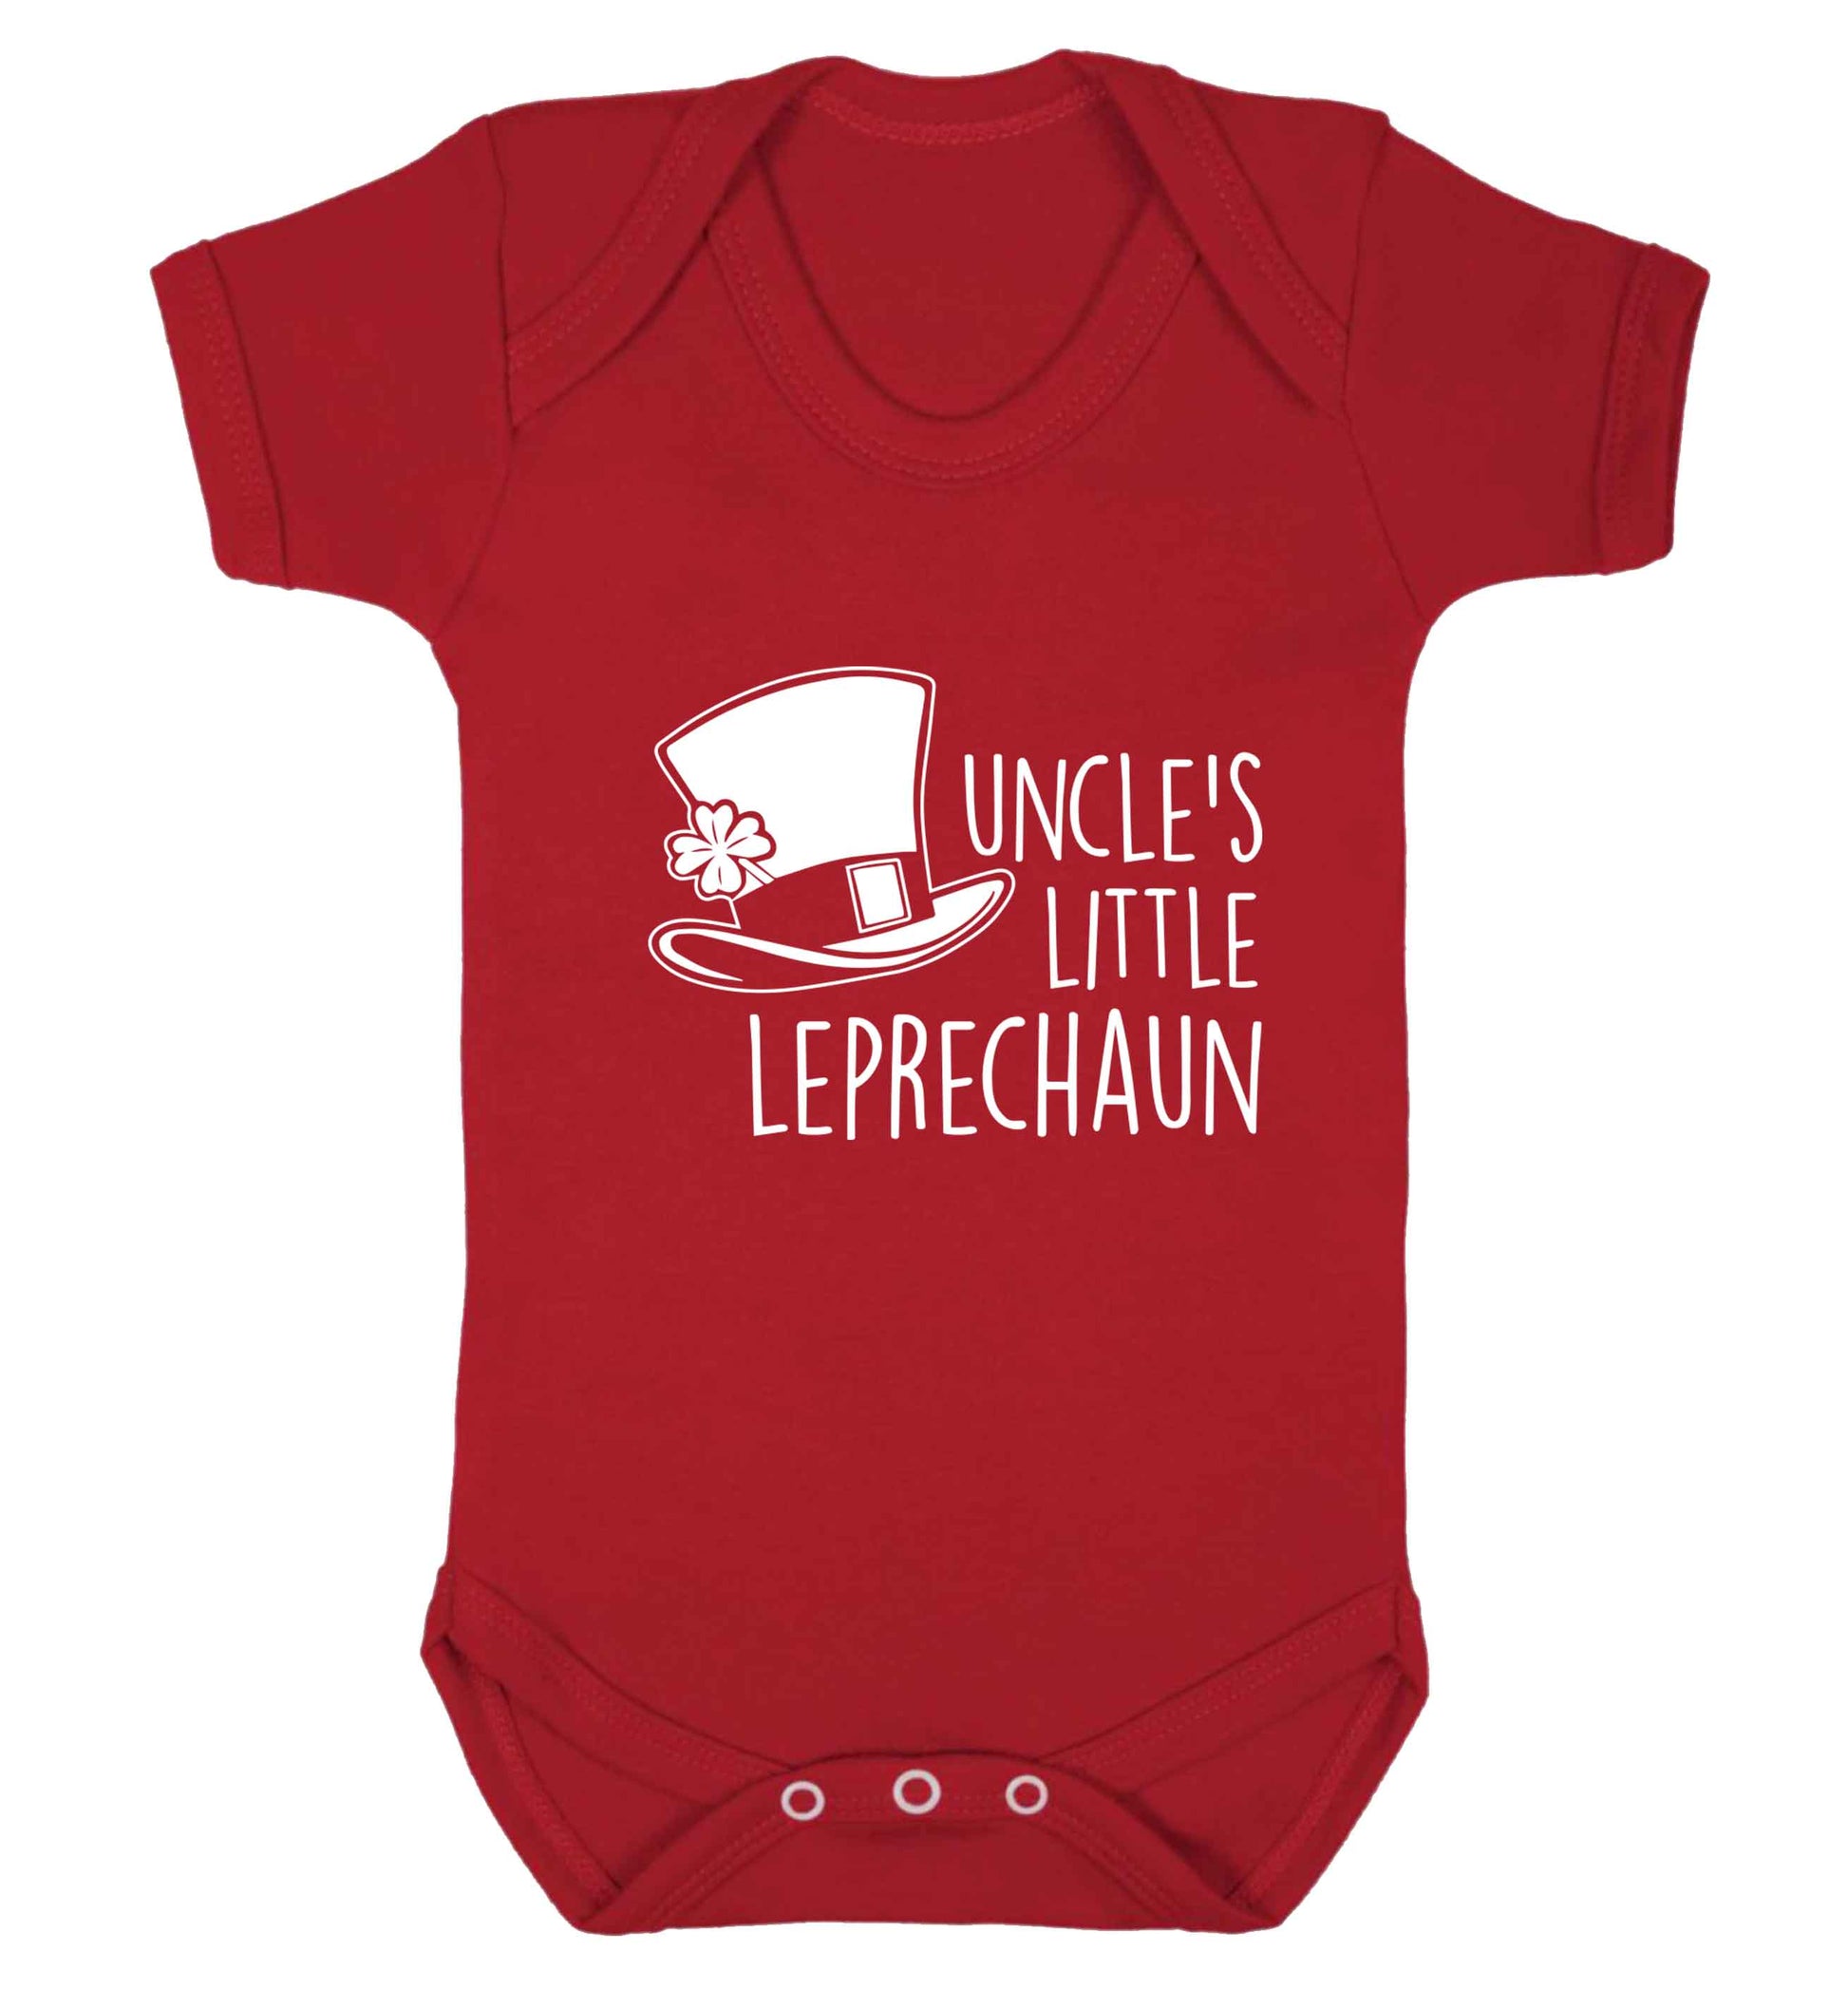 Uncles little leprechaun baby vest red 18-24 months